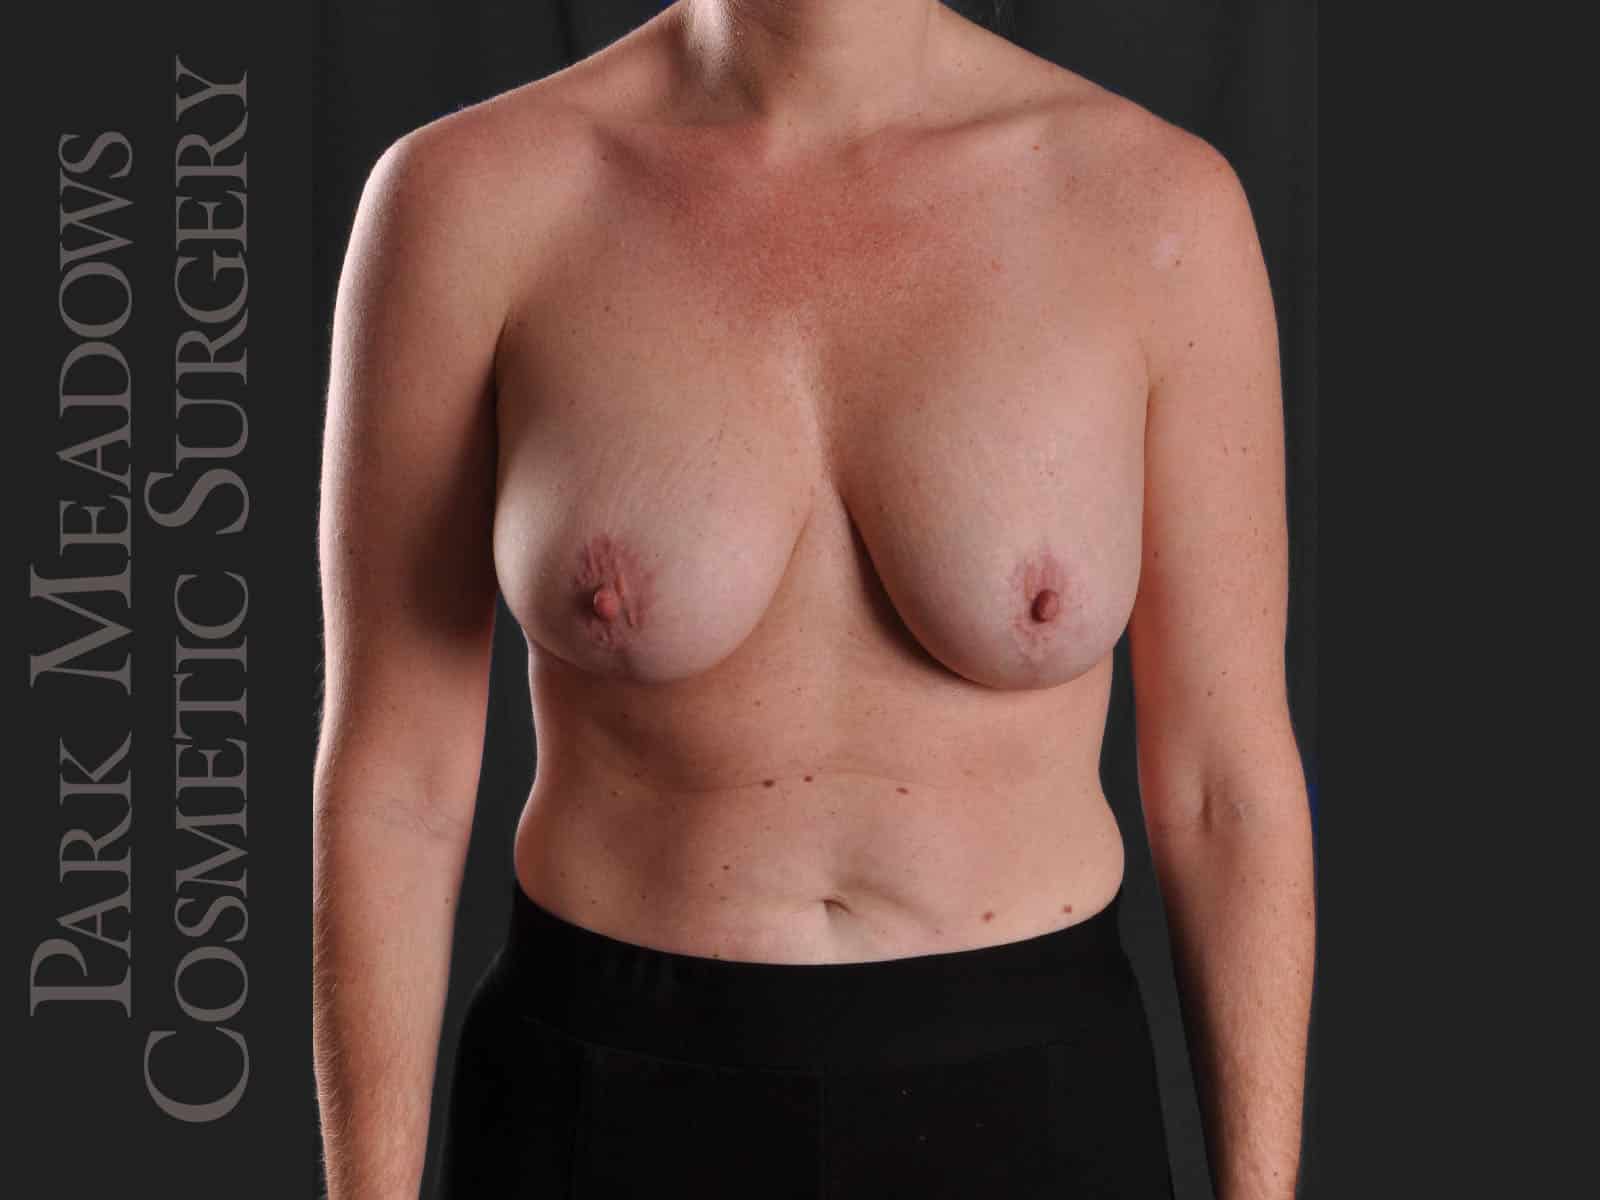 Mastopexy with Silicone Breast Augmentation